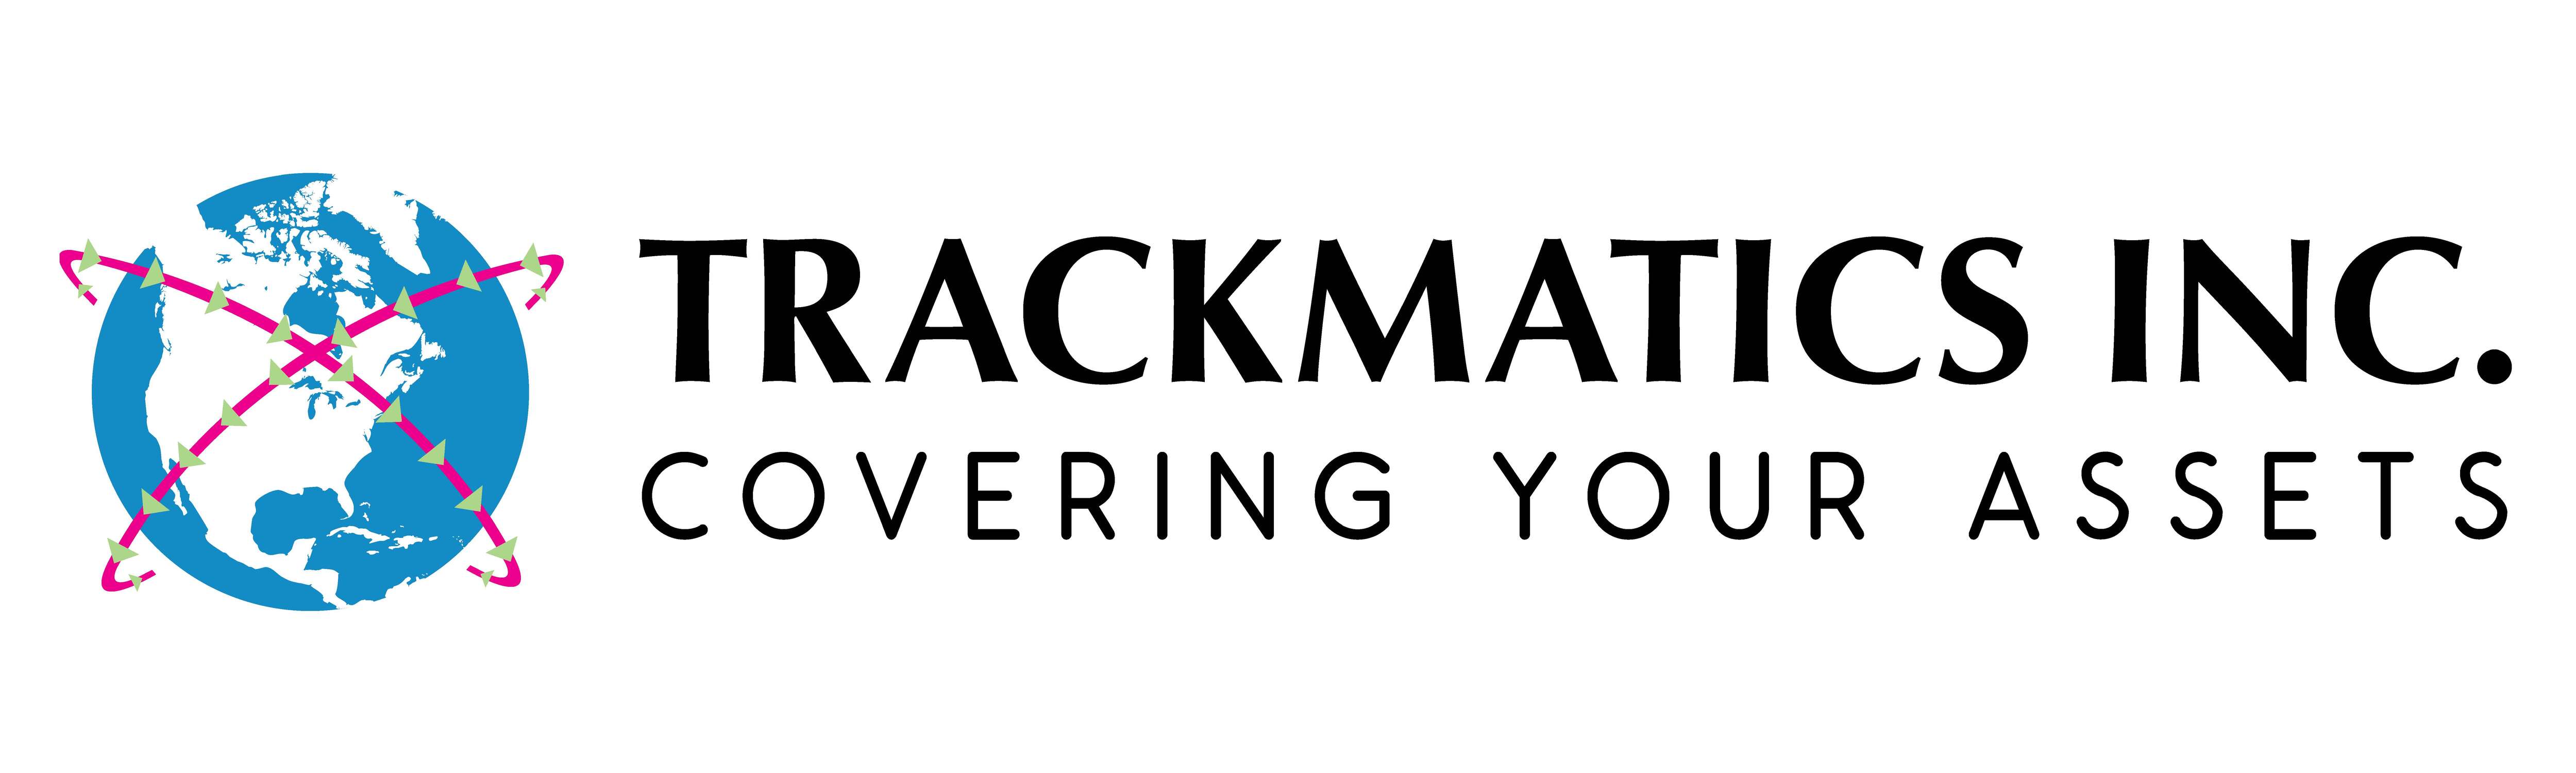 Trackmatics Inc.